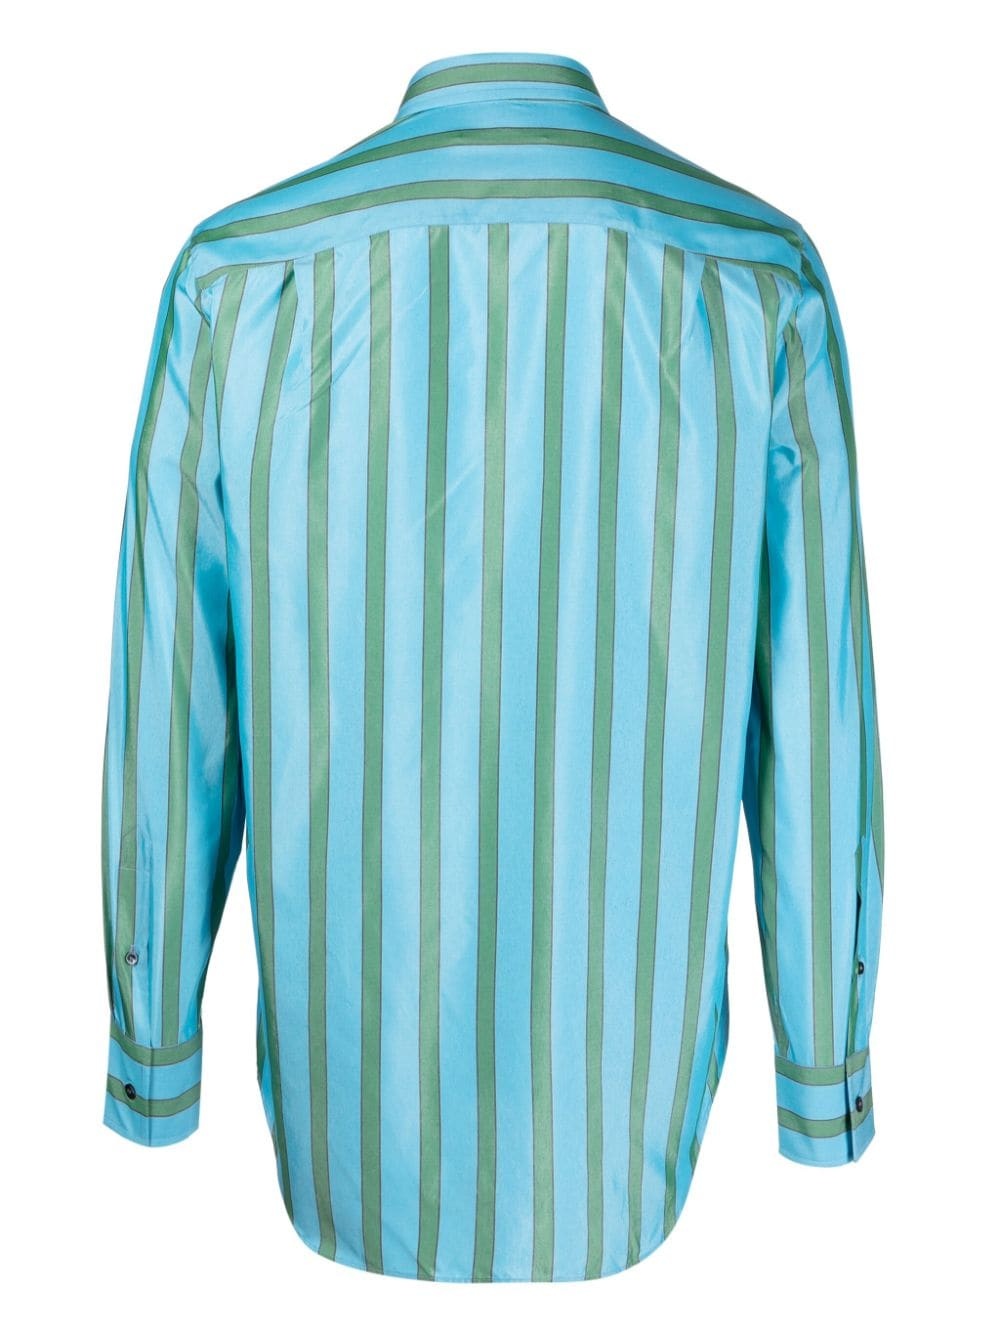 Langstone striped shirt - 2